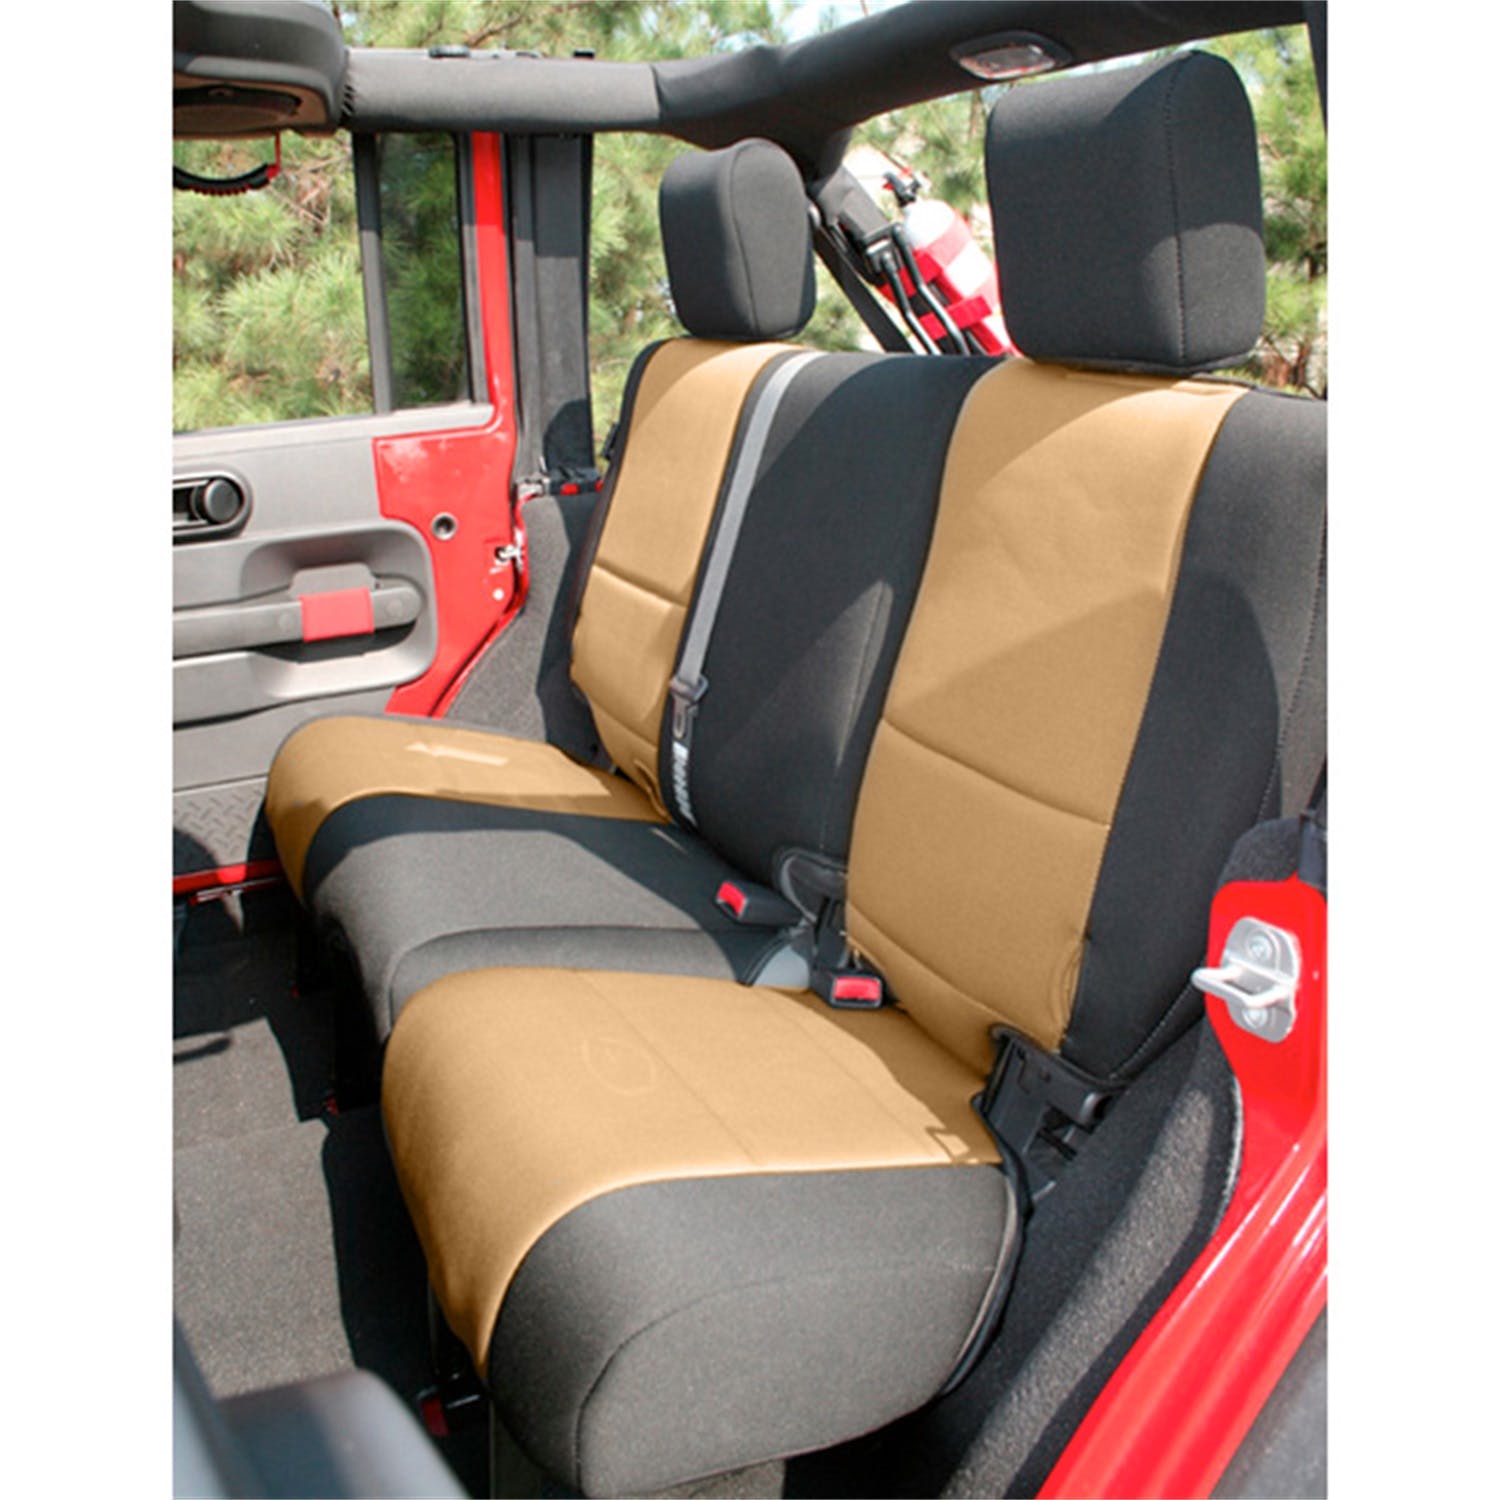 Rugged Ridge 13265.04 Neoprene Rear Seat Cover; Black and Tan; 07-17 Jeep Wrangler JK